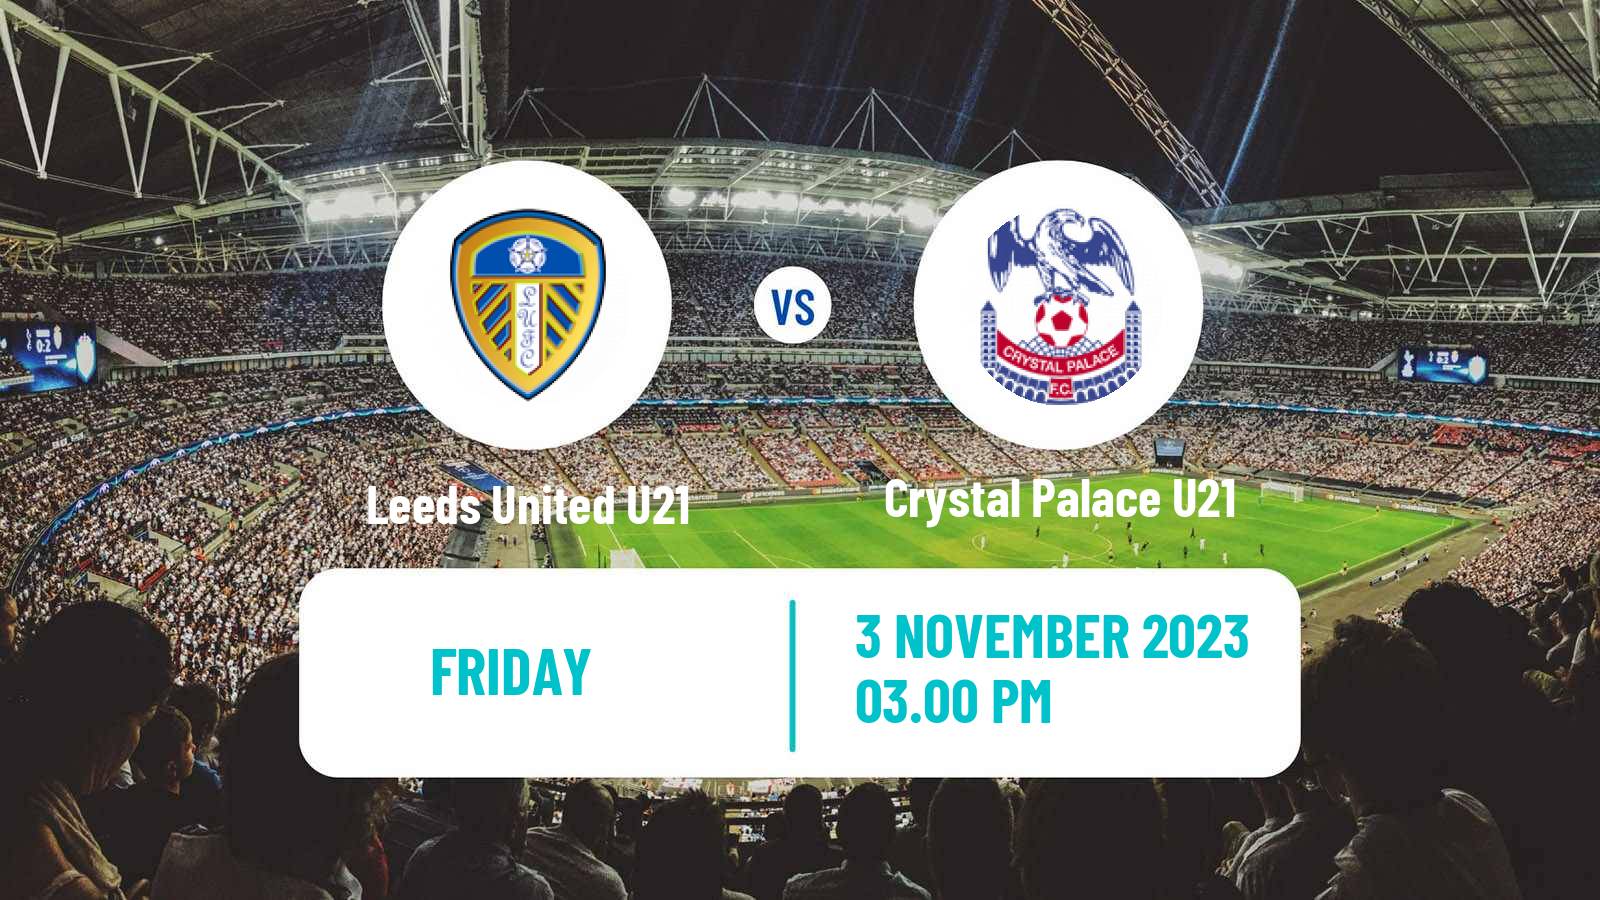 Soccer English Premier League 2 Leeds United U21 - Crystal Palace U21